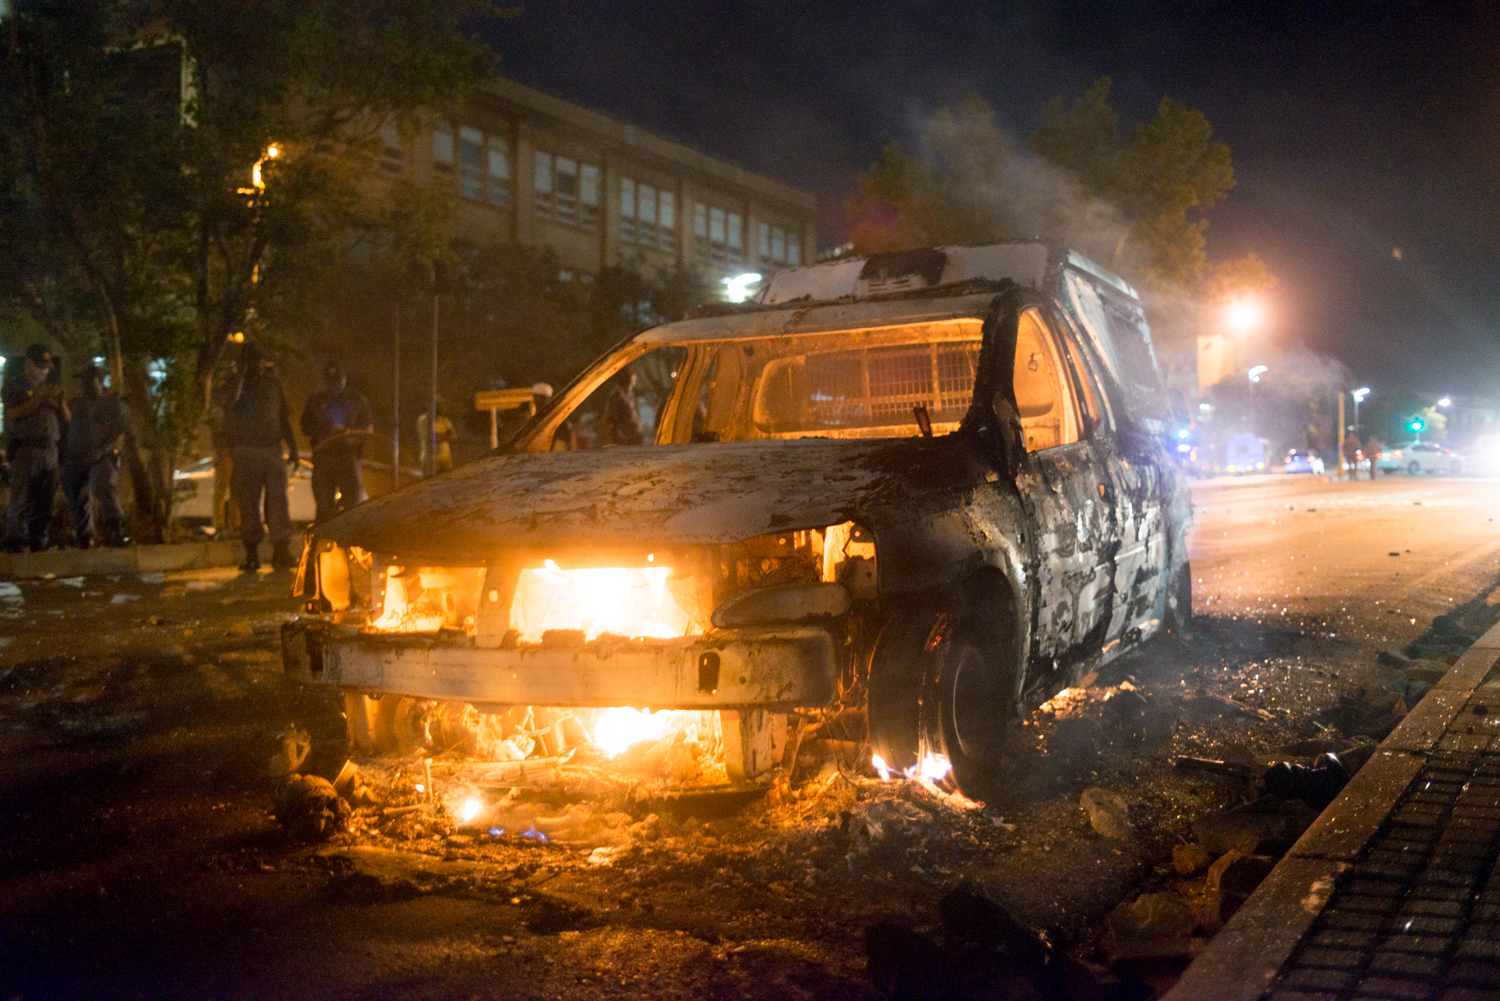 #feesmustfall protest wits Braamfontein police 11